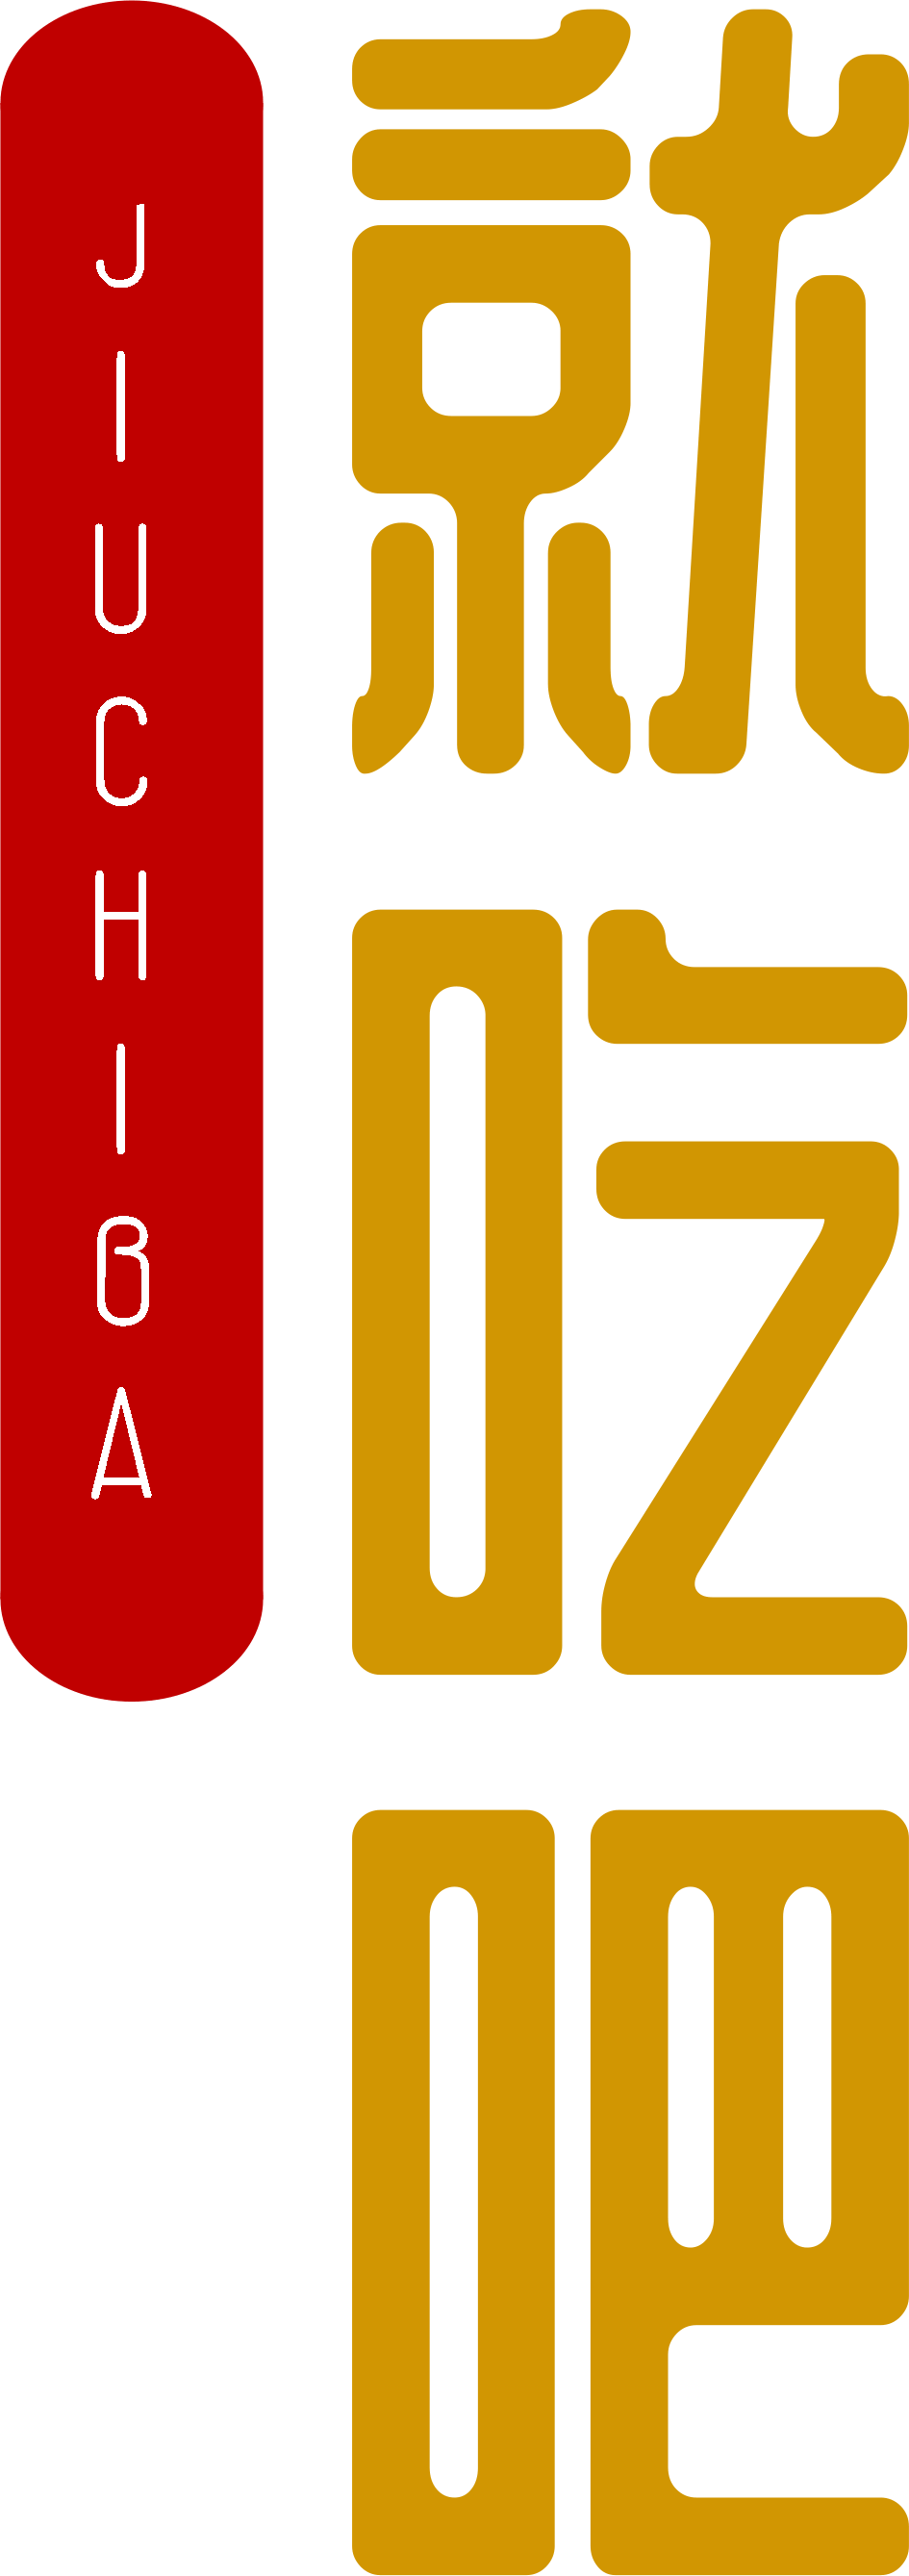 Jiu Chi Ba Pte. Ltd. logo